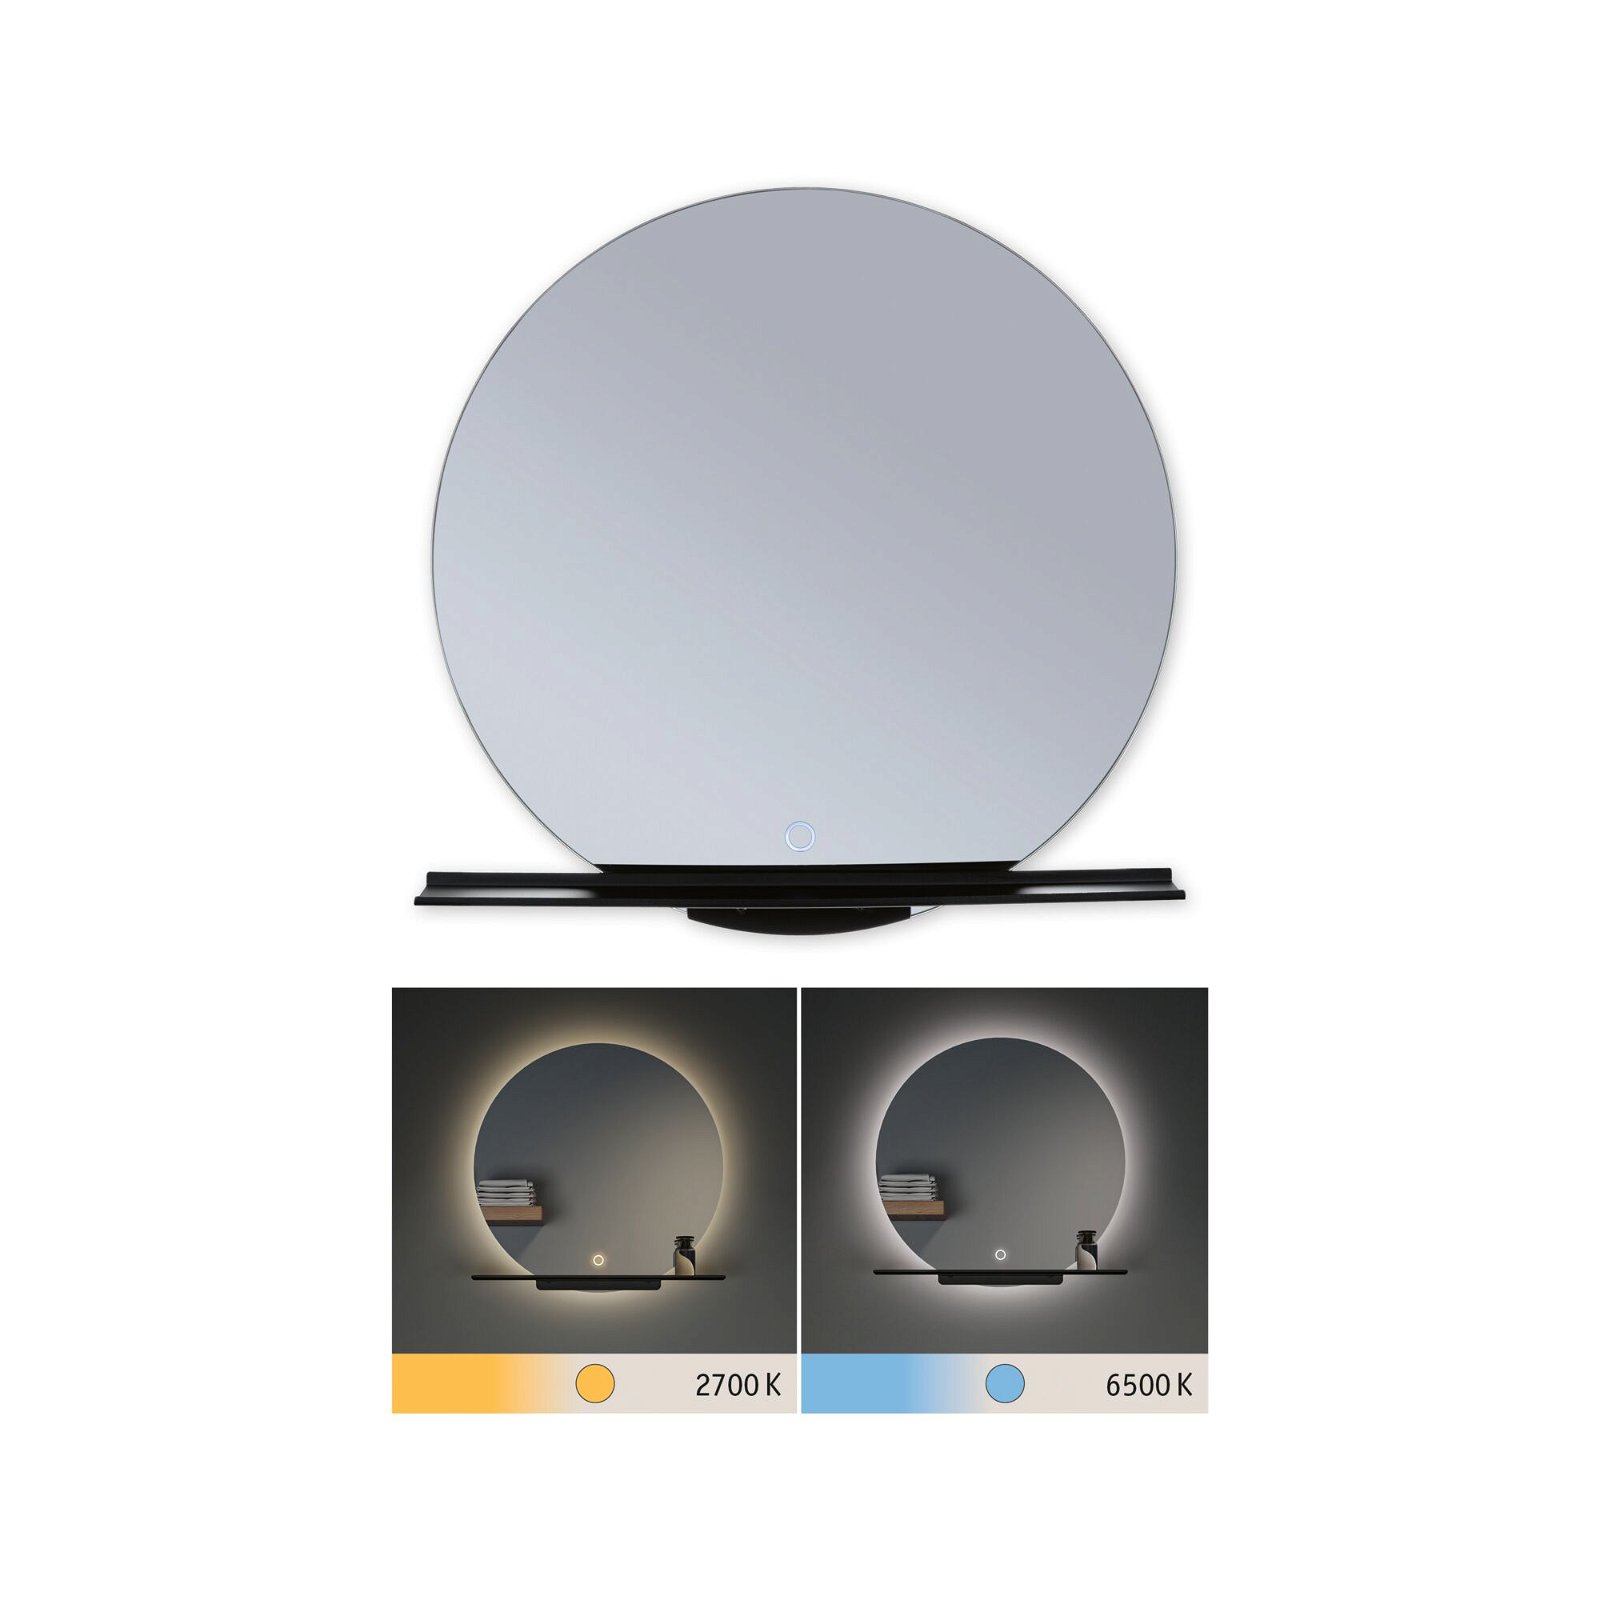 LED-lysspejl Miro IP44 Tunable White 500lm 230V 11W Spejl/Mat sort